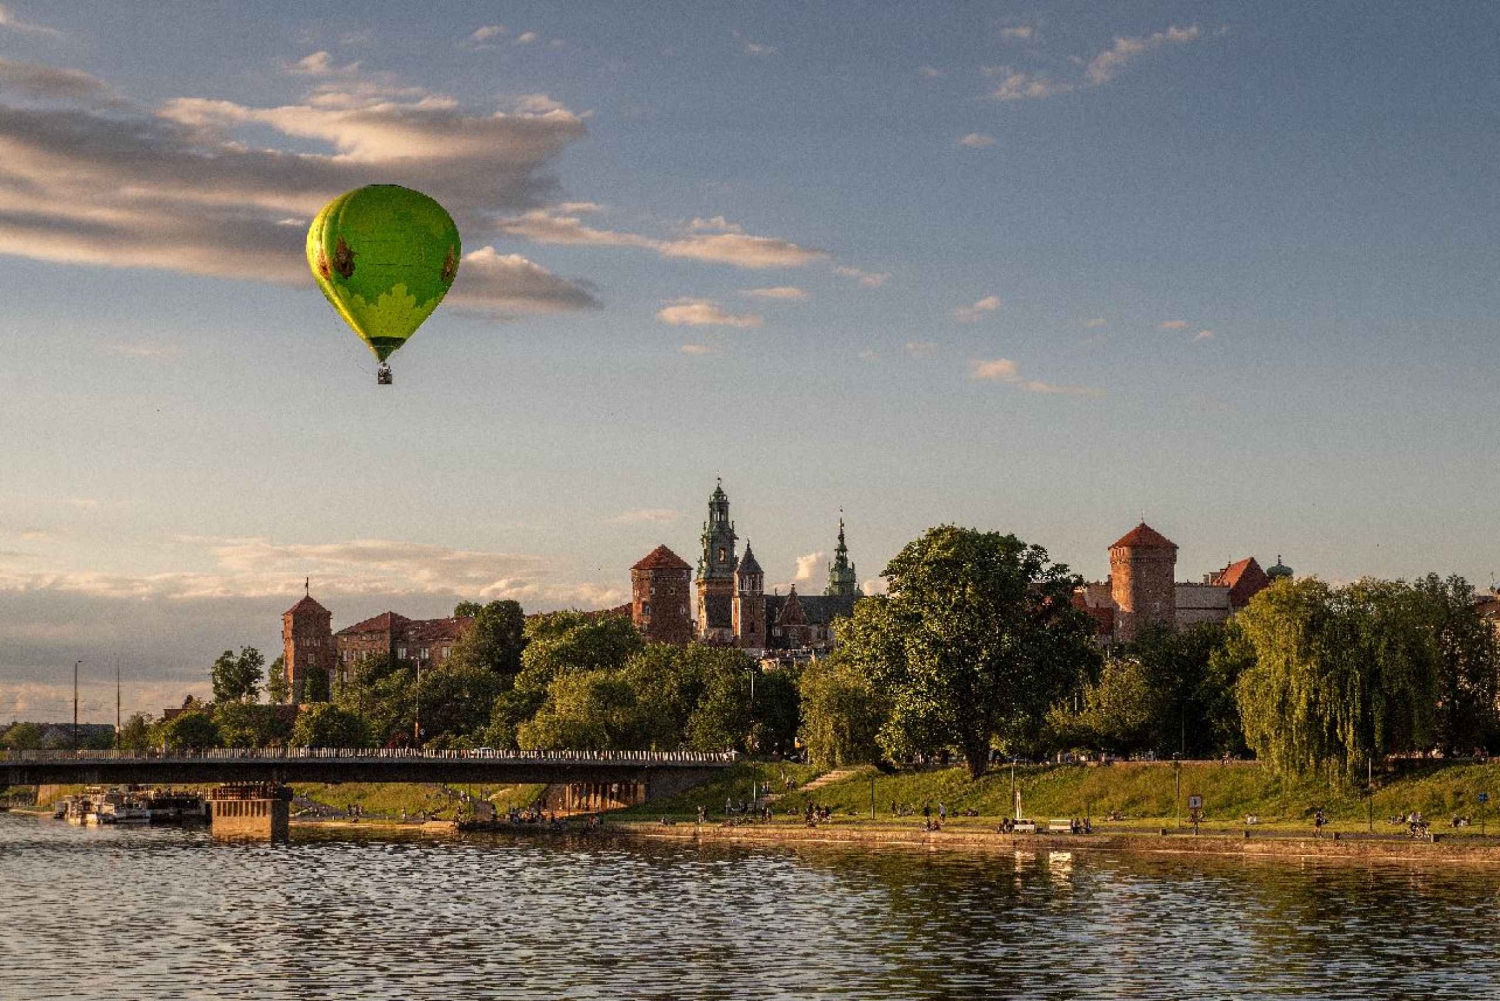 Kraków: Hot Air Balloon Flight with Champagne